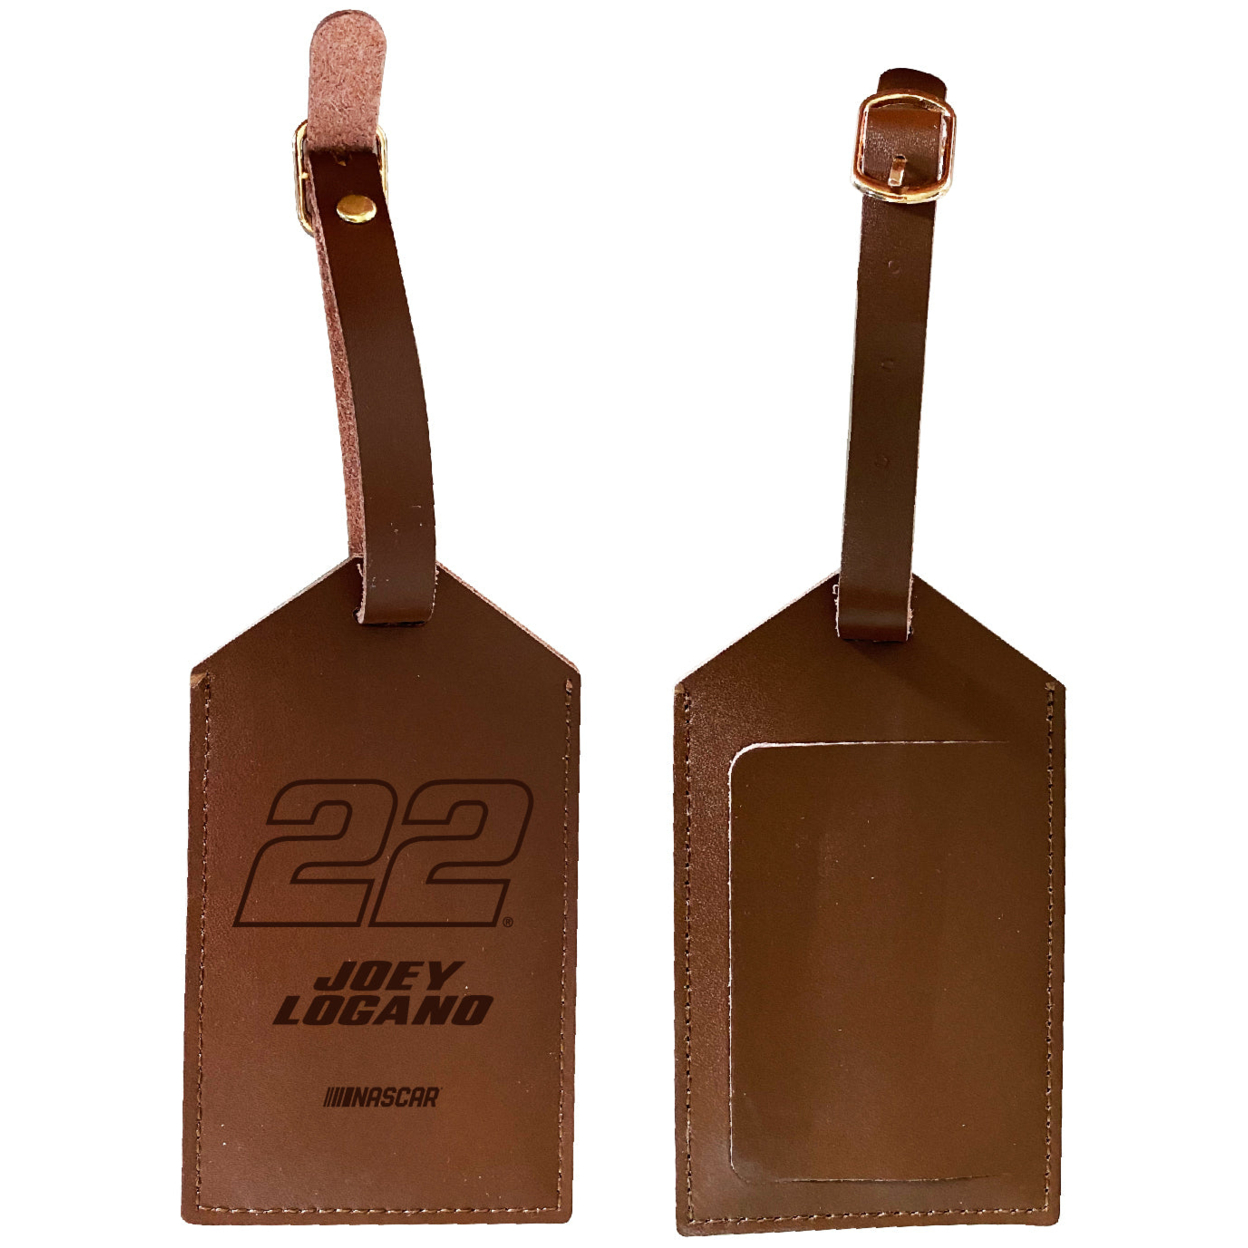 Nascar #22 Joey Logano Leather Luggage Tag Engraved